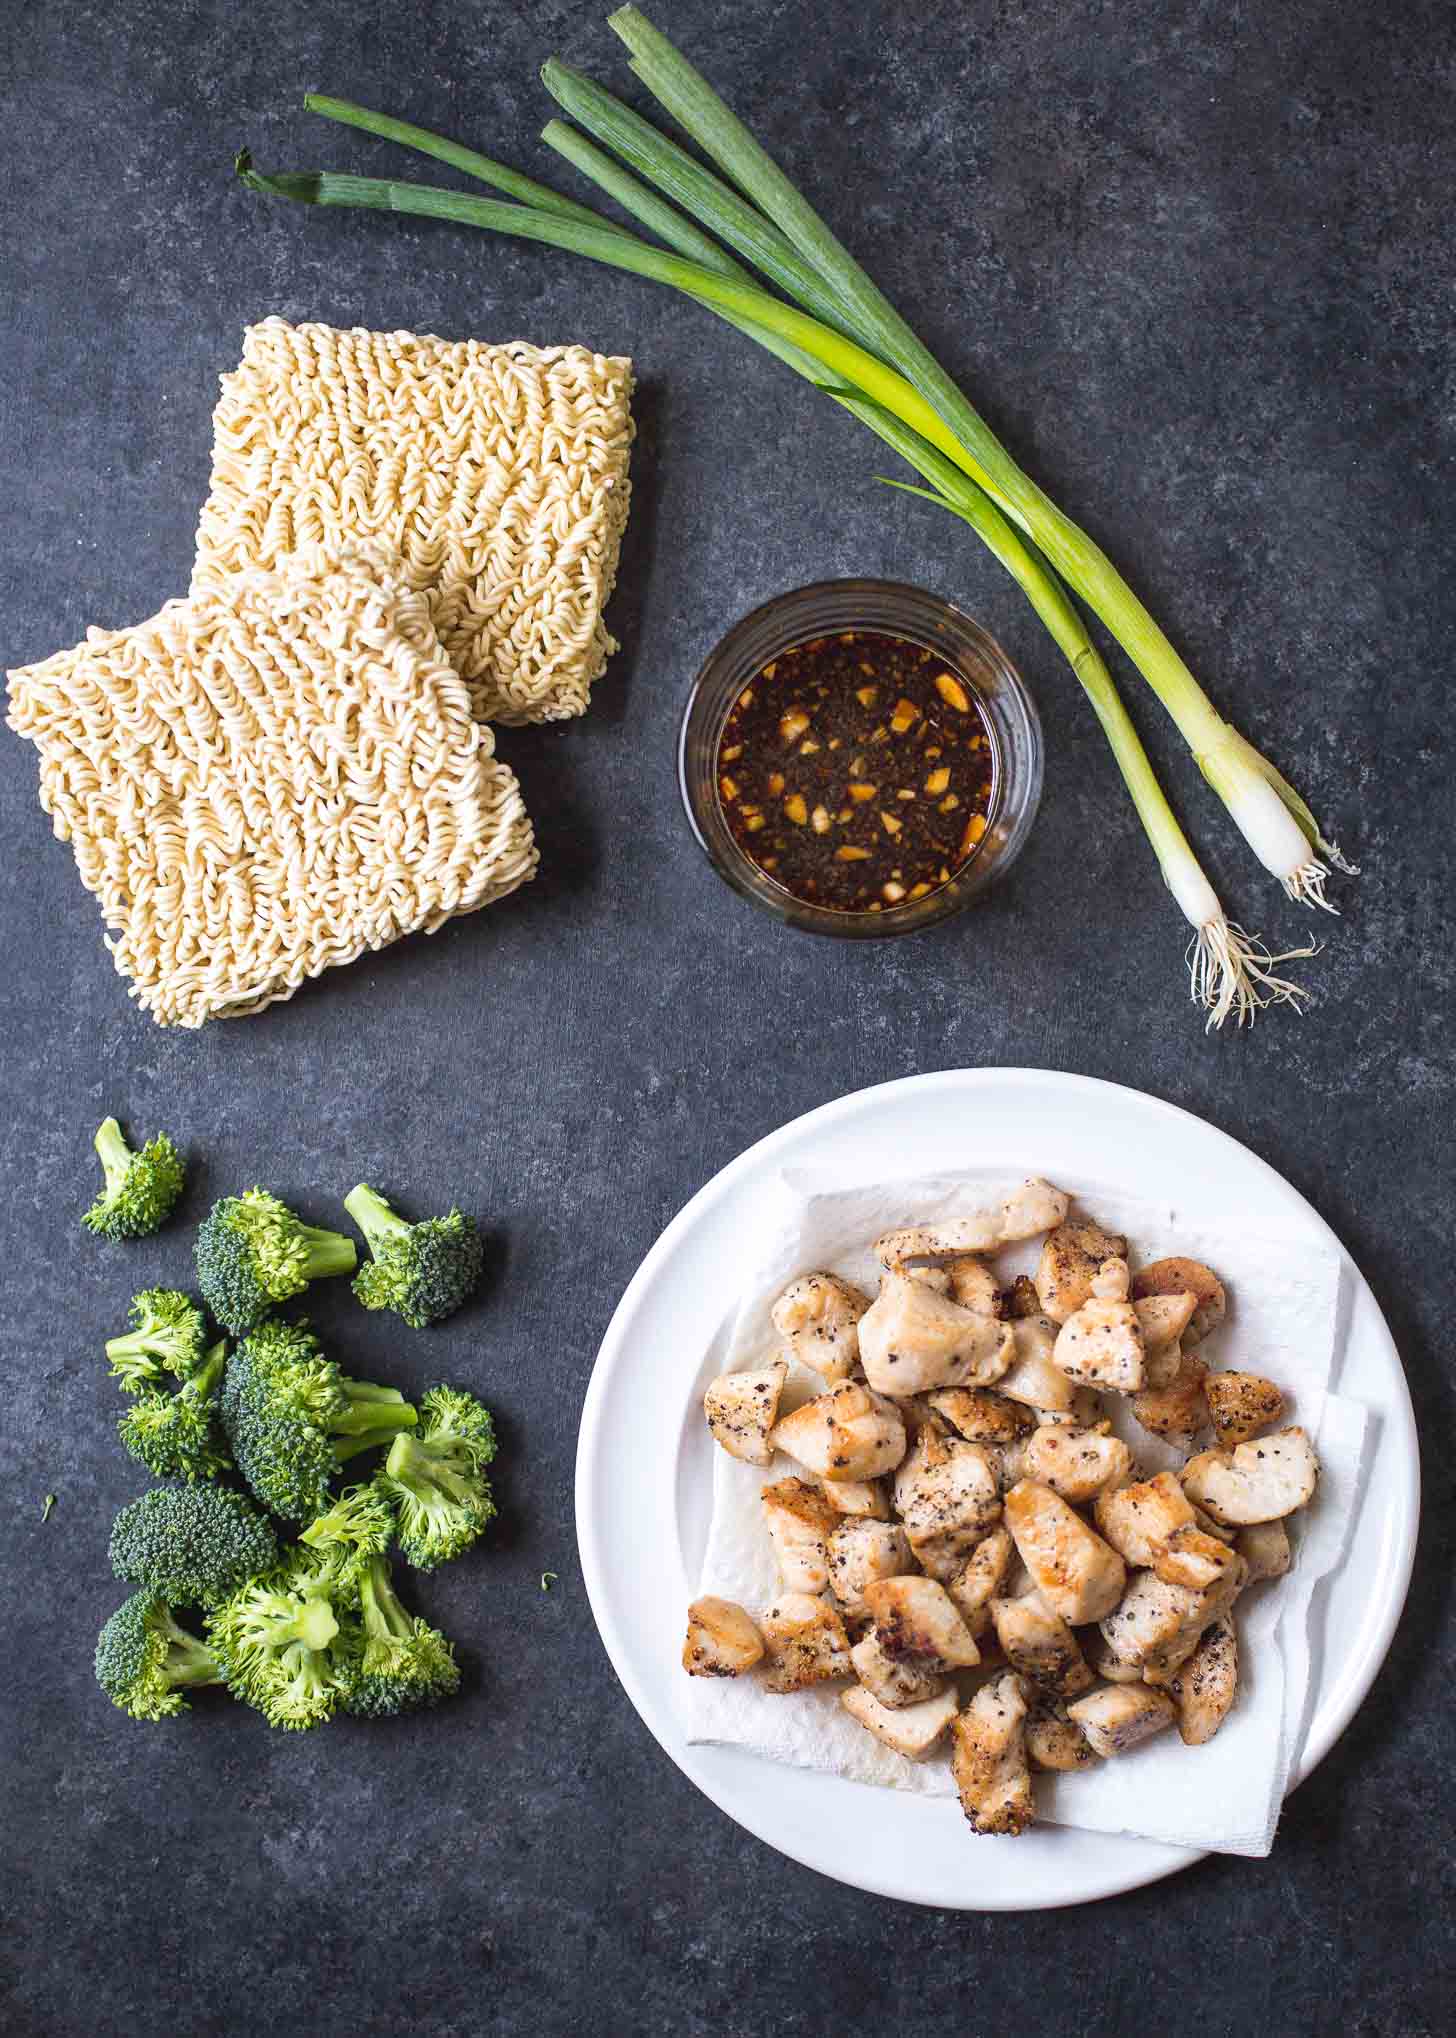 chicken, ramen, broccoli, green onions and sauce on a grey countertop